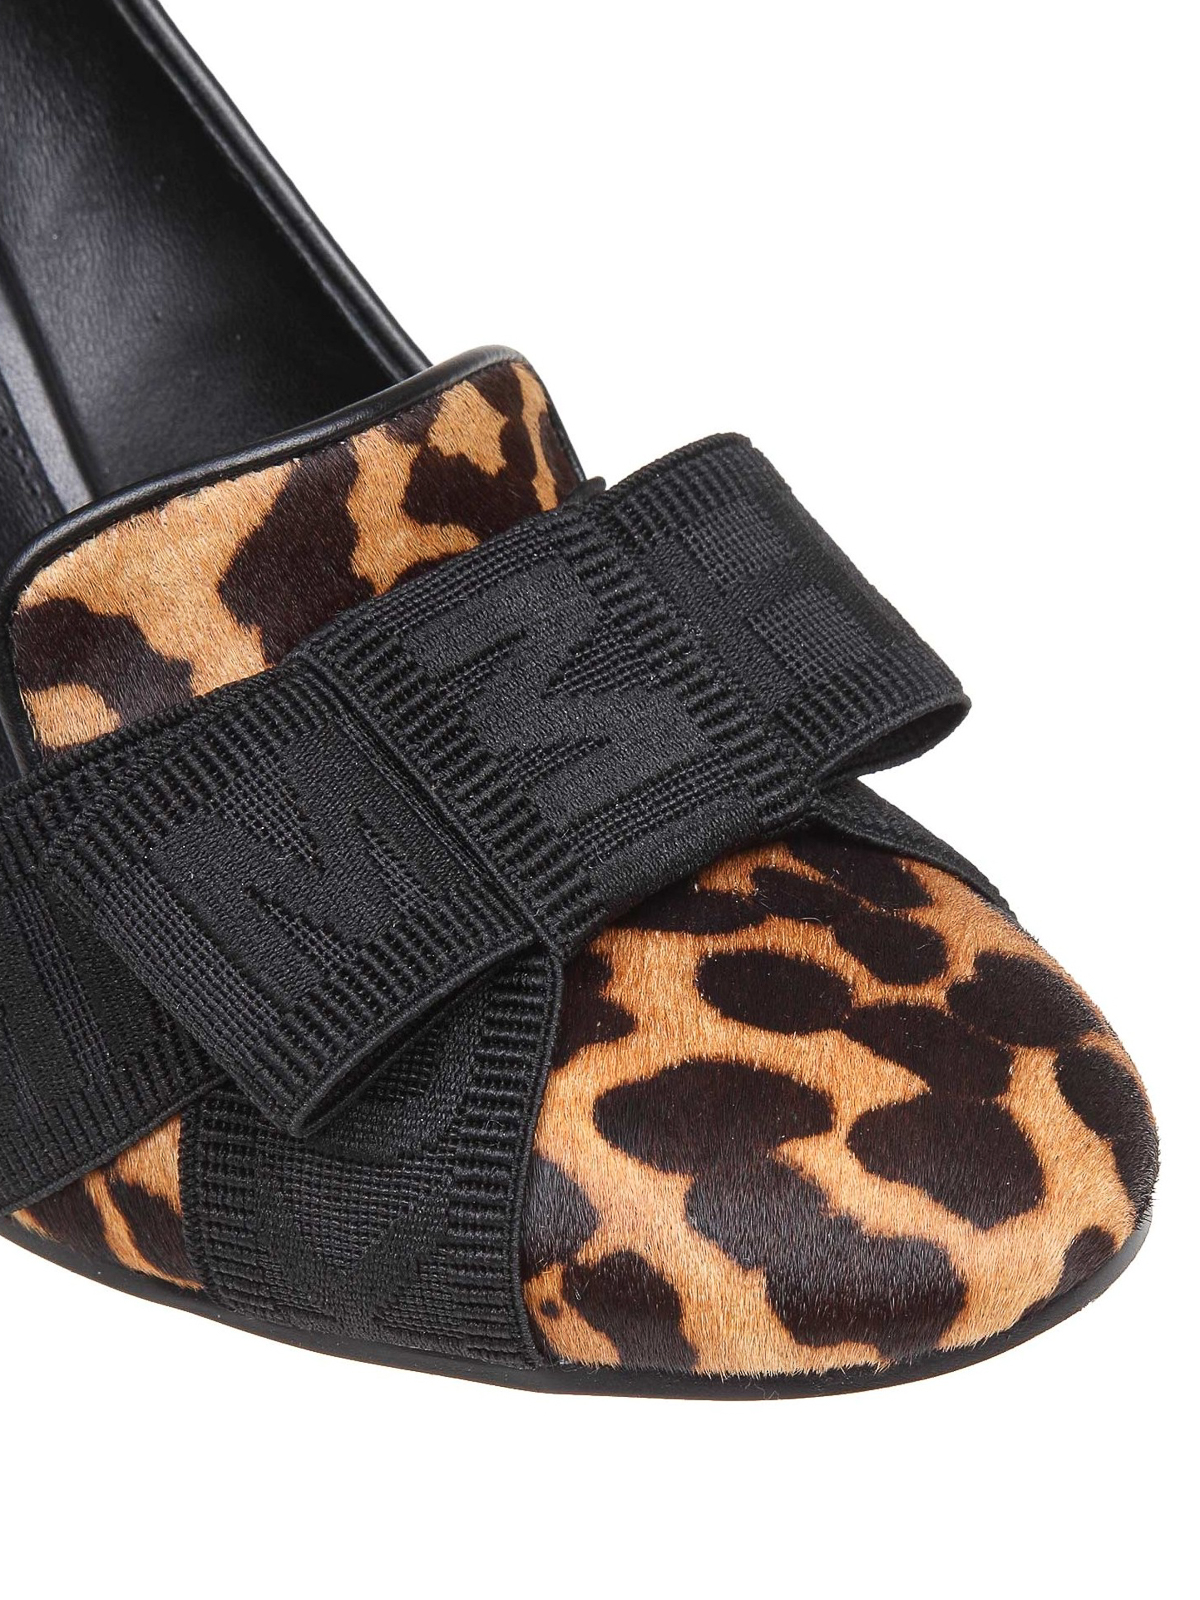 Michael Kors Cheetah Sneakers Hotsell SAVE 45  aveclumierecom